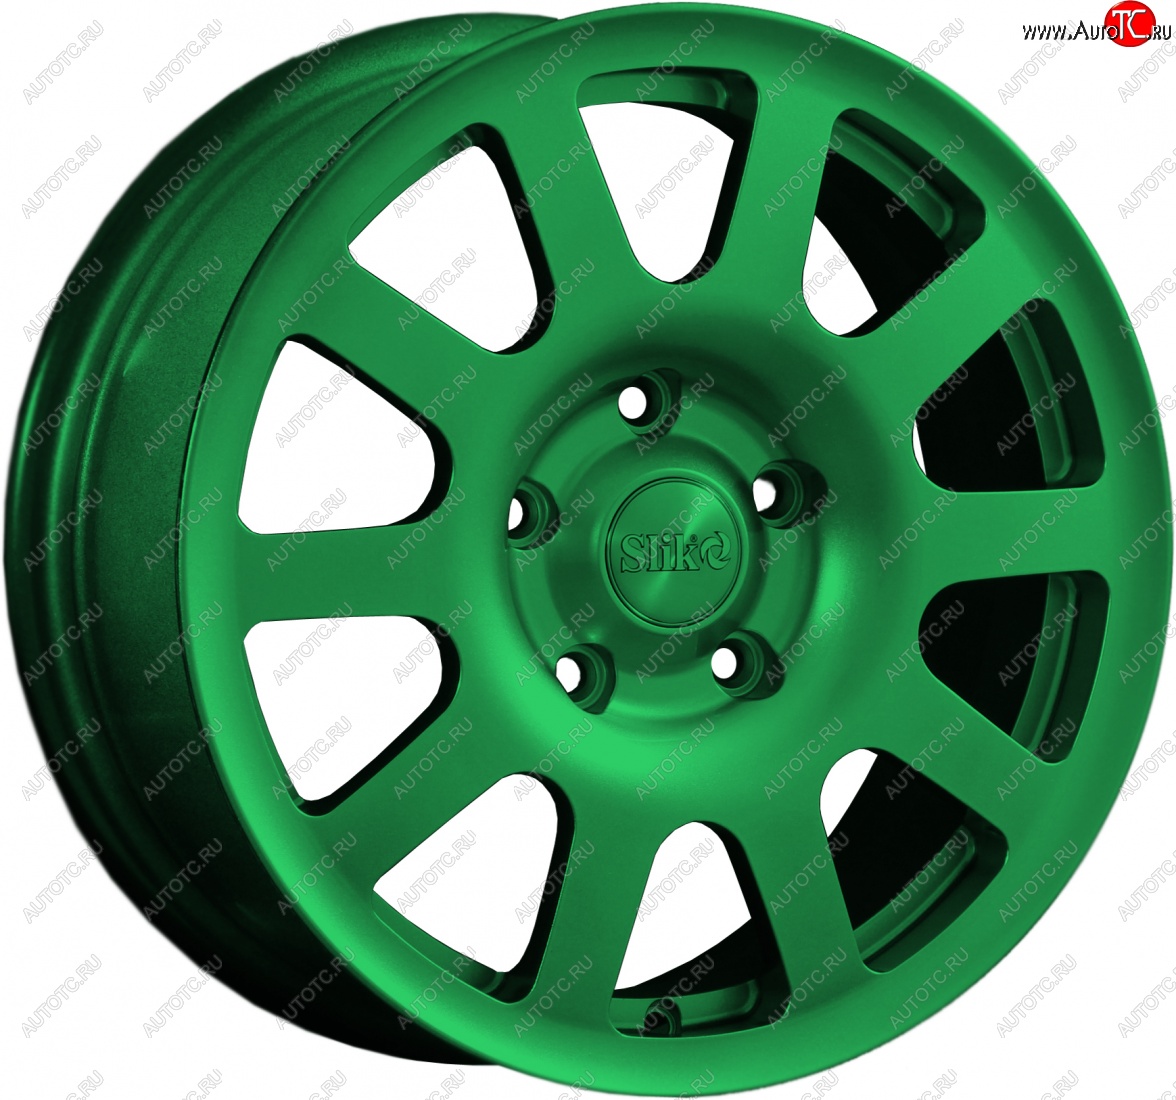 18 999 р. Кованый диск Slik Sport 6.5x16 (Зеленый) Toyota Corolla Verso Е120 (2001-2004) 5x114.3xDIA60.1xET45.0 (Цвет: Зеленый)